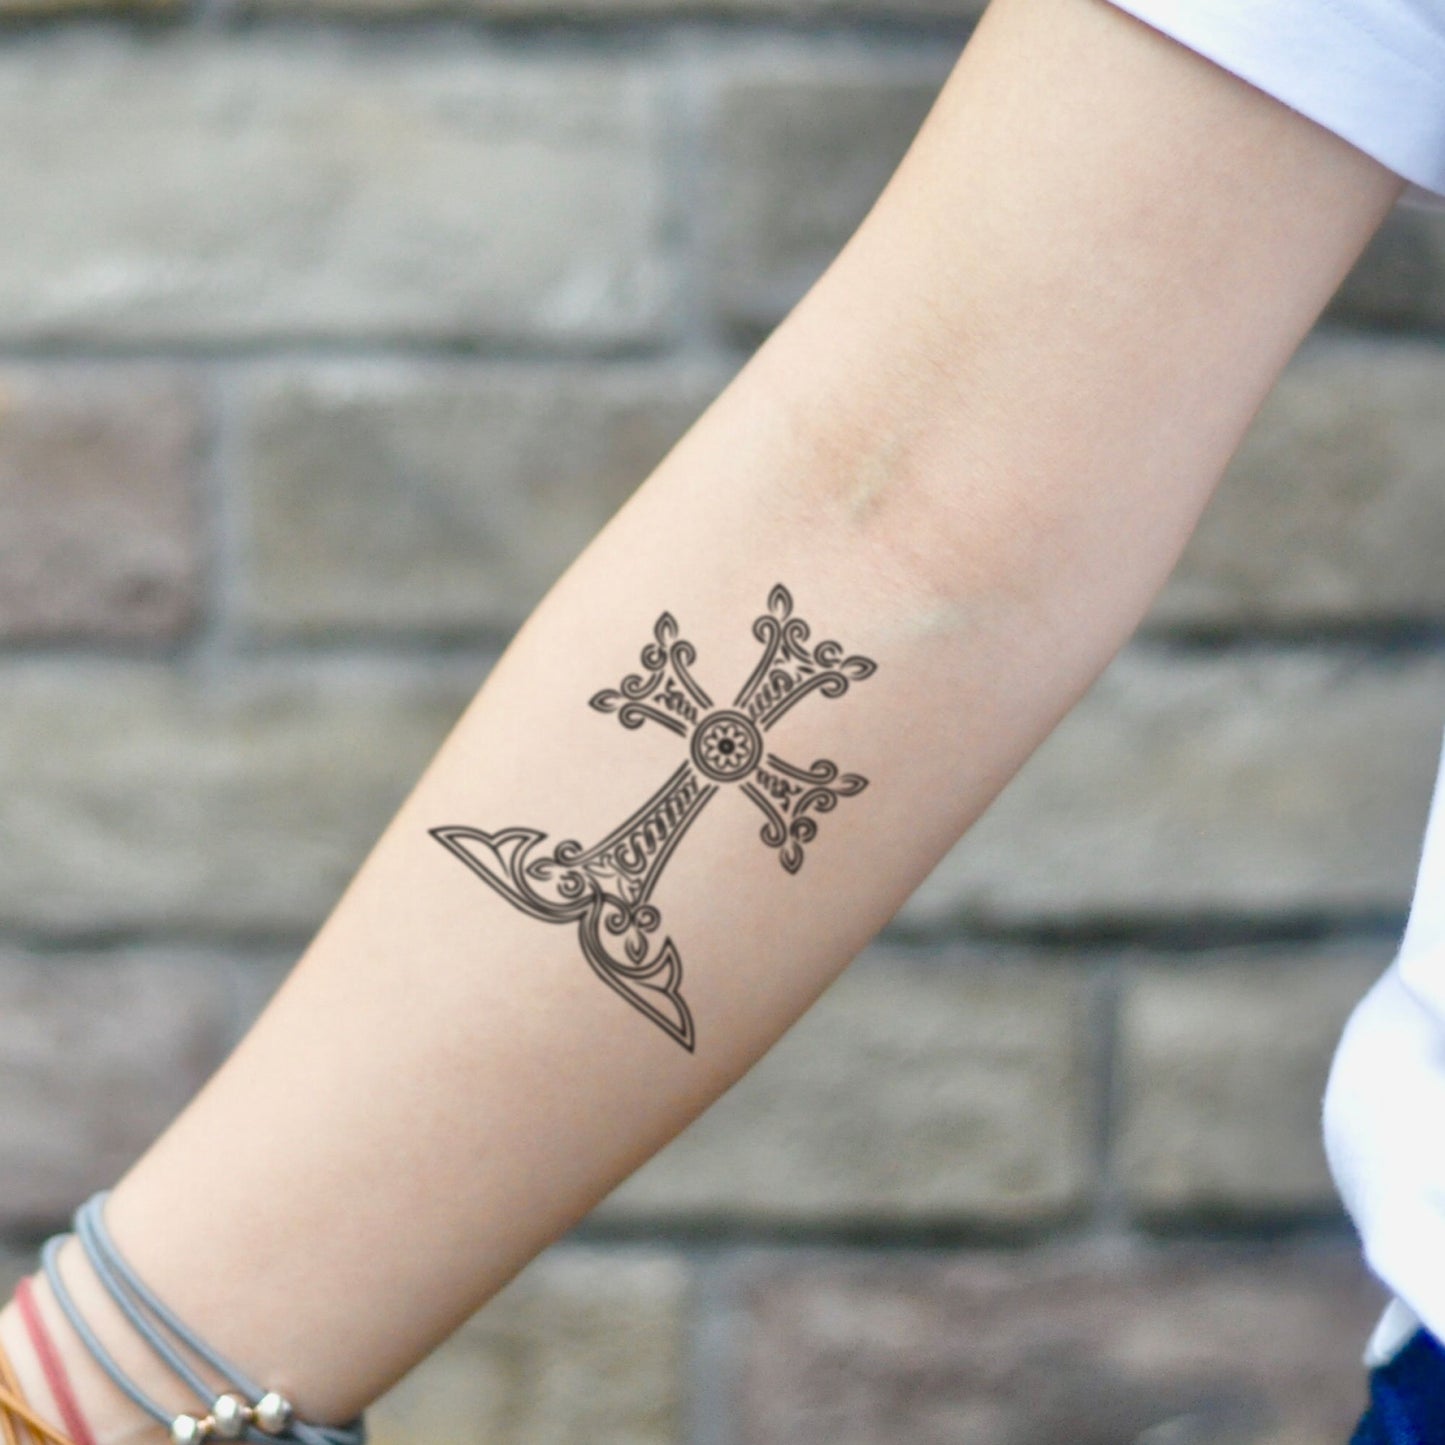 fake small armenian cross illustrative temporary tattoo sticker design idea on inner arm